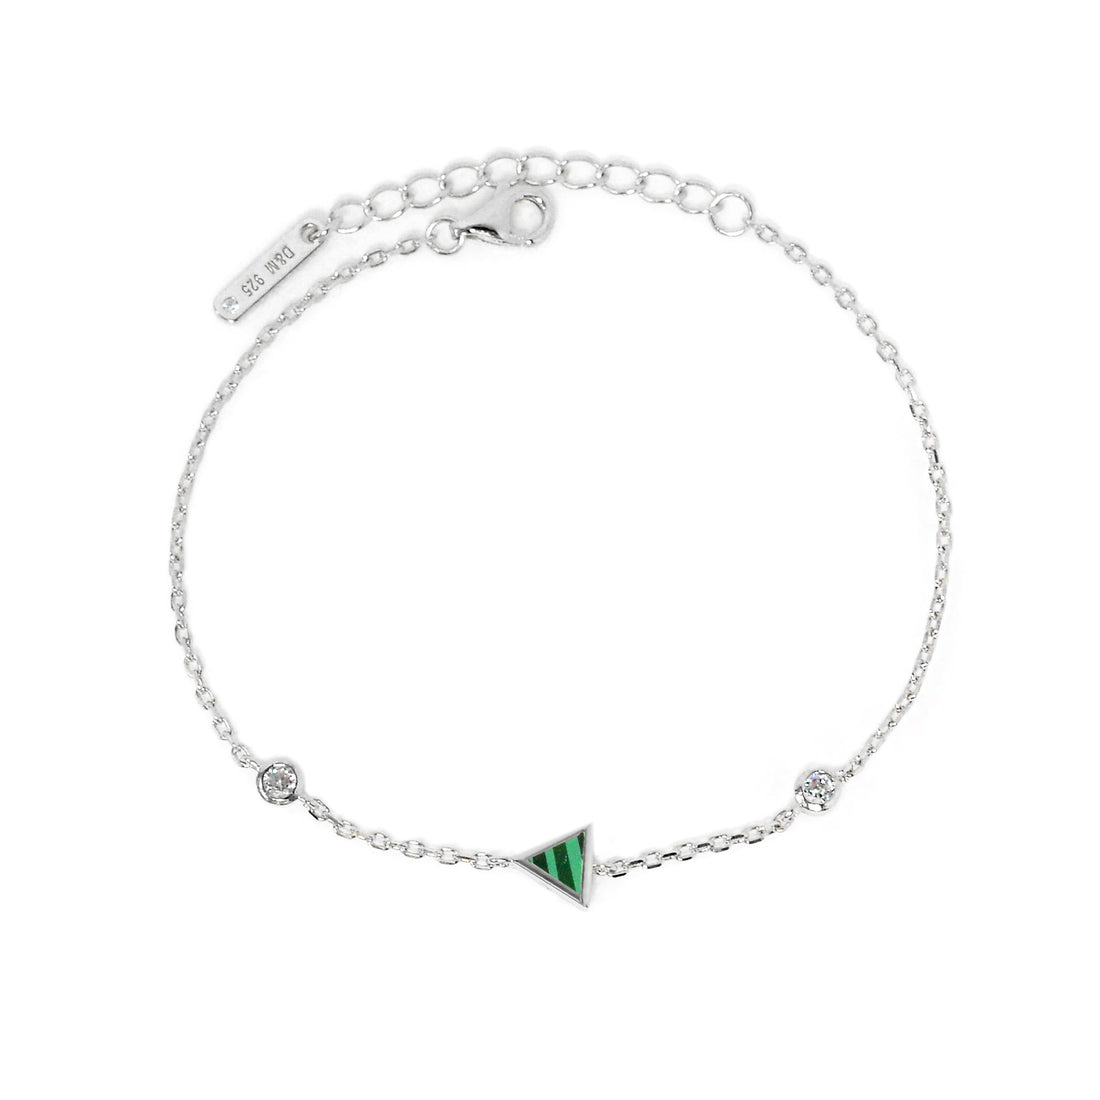 Dolce Mondo Silver Zircon Bracelet For Lady 2223476